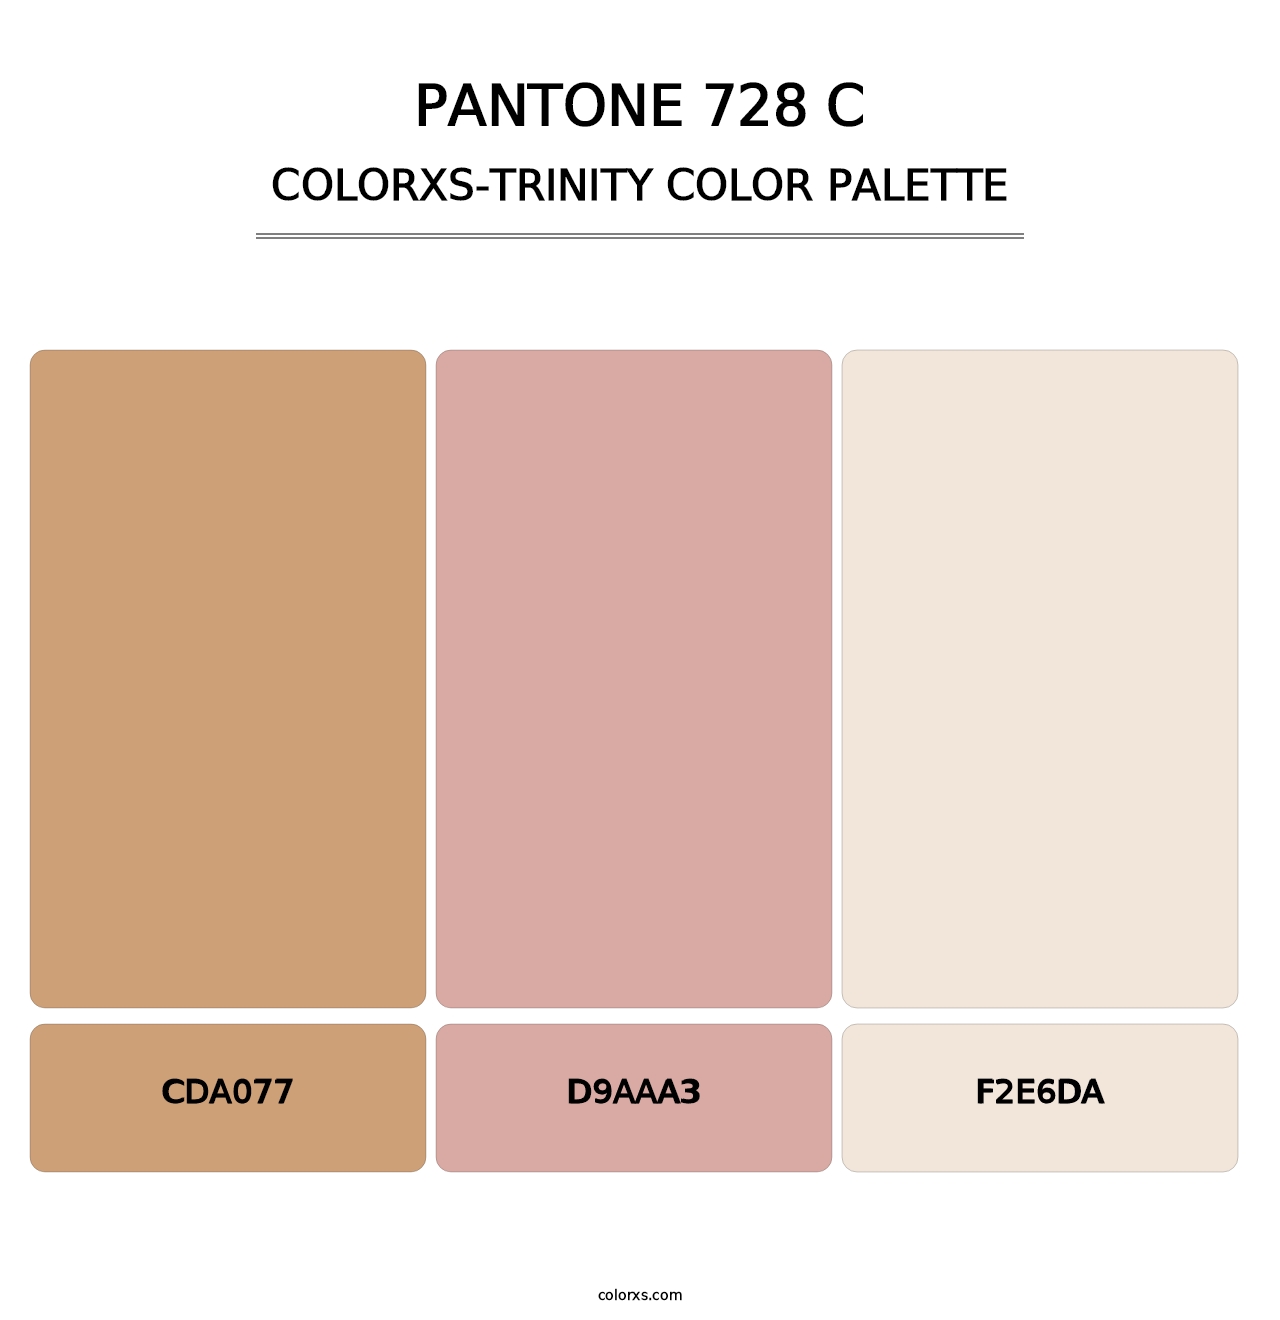 PANTONE 728 C - Colorxs Trinity Palette